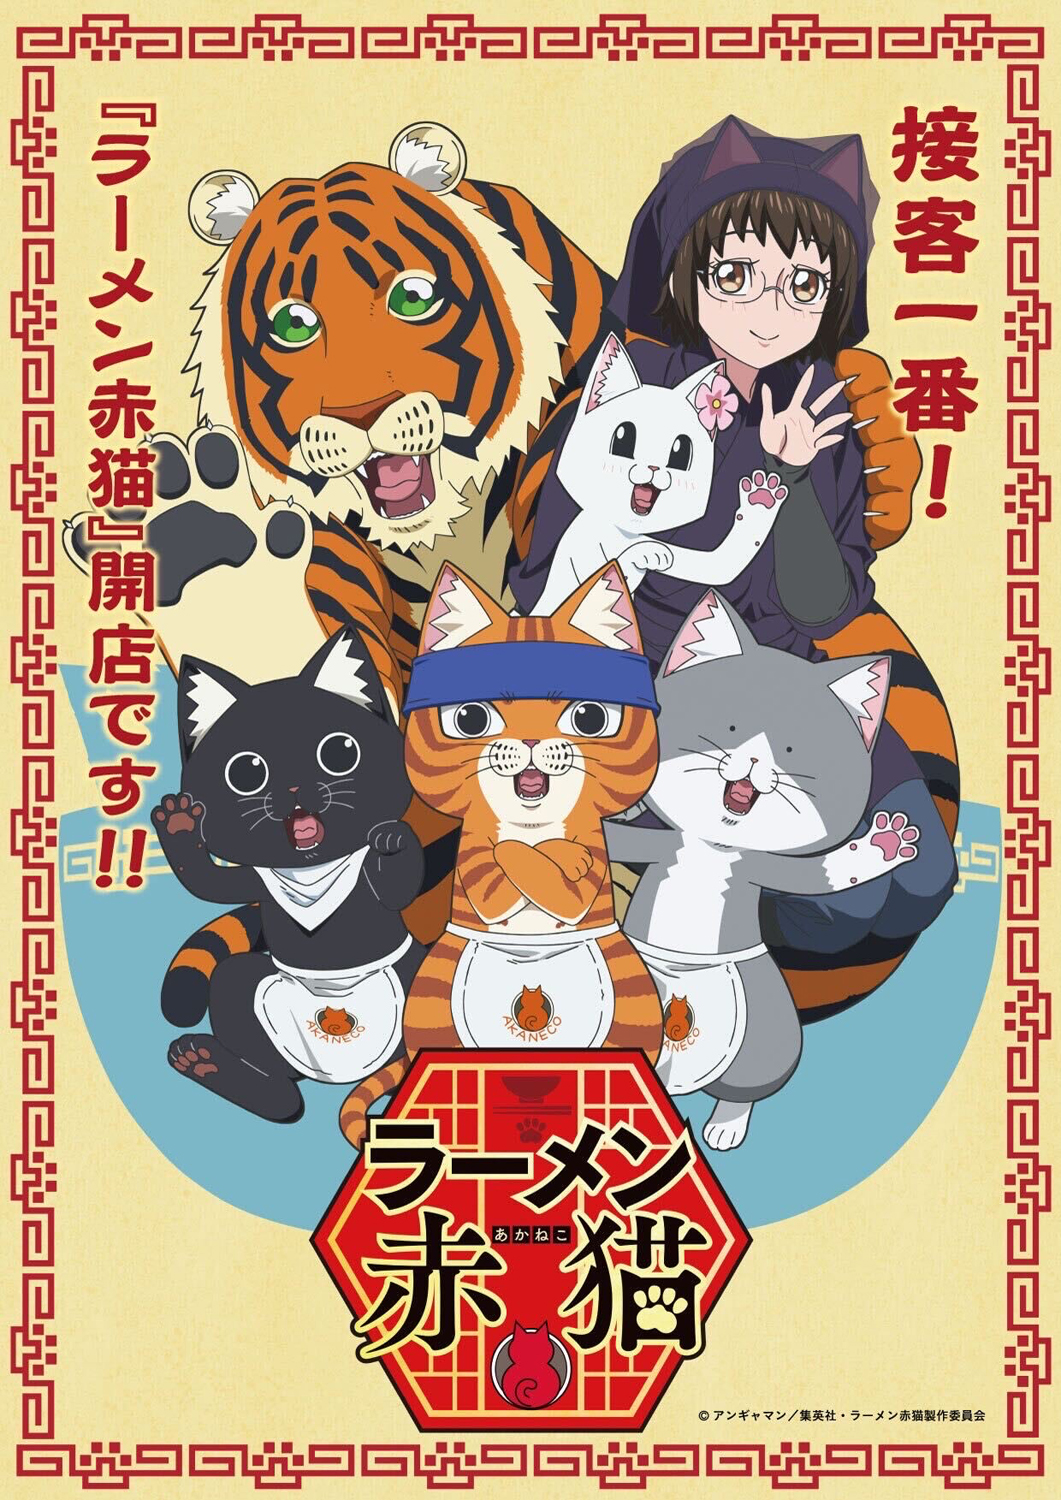 TVアニメ「ラーメン赤猫」 | ©アンギャマン / 集英社・ラーメン赤猫製作委員会